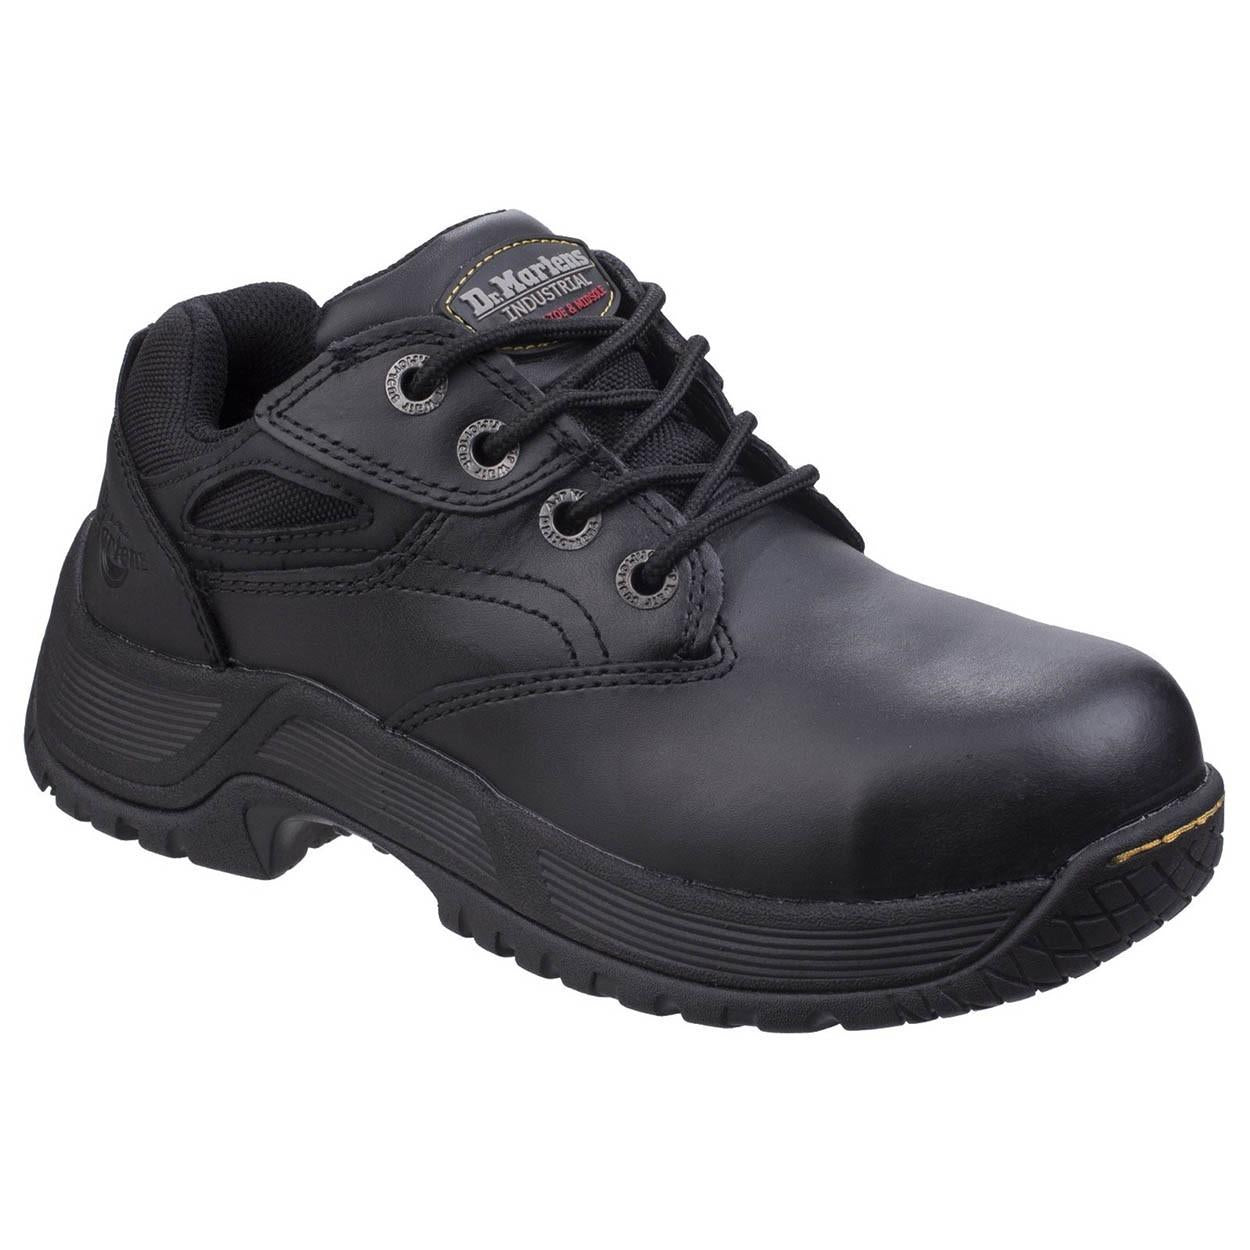 Dr Martens Calvert S1P black leather steel toe/midsole work safety shoes